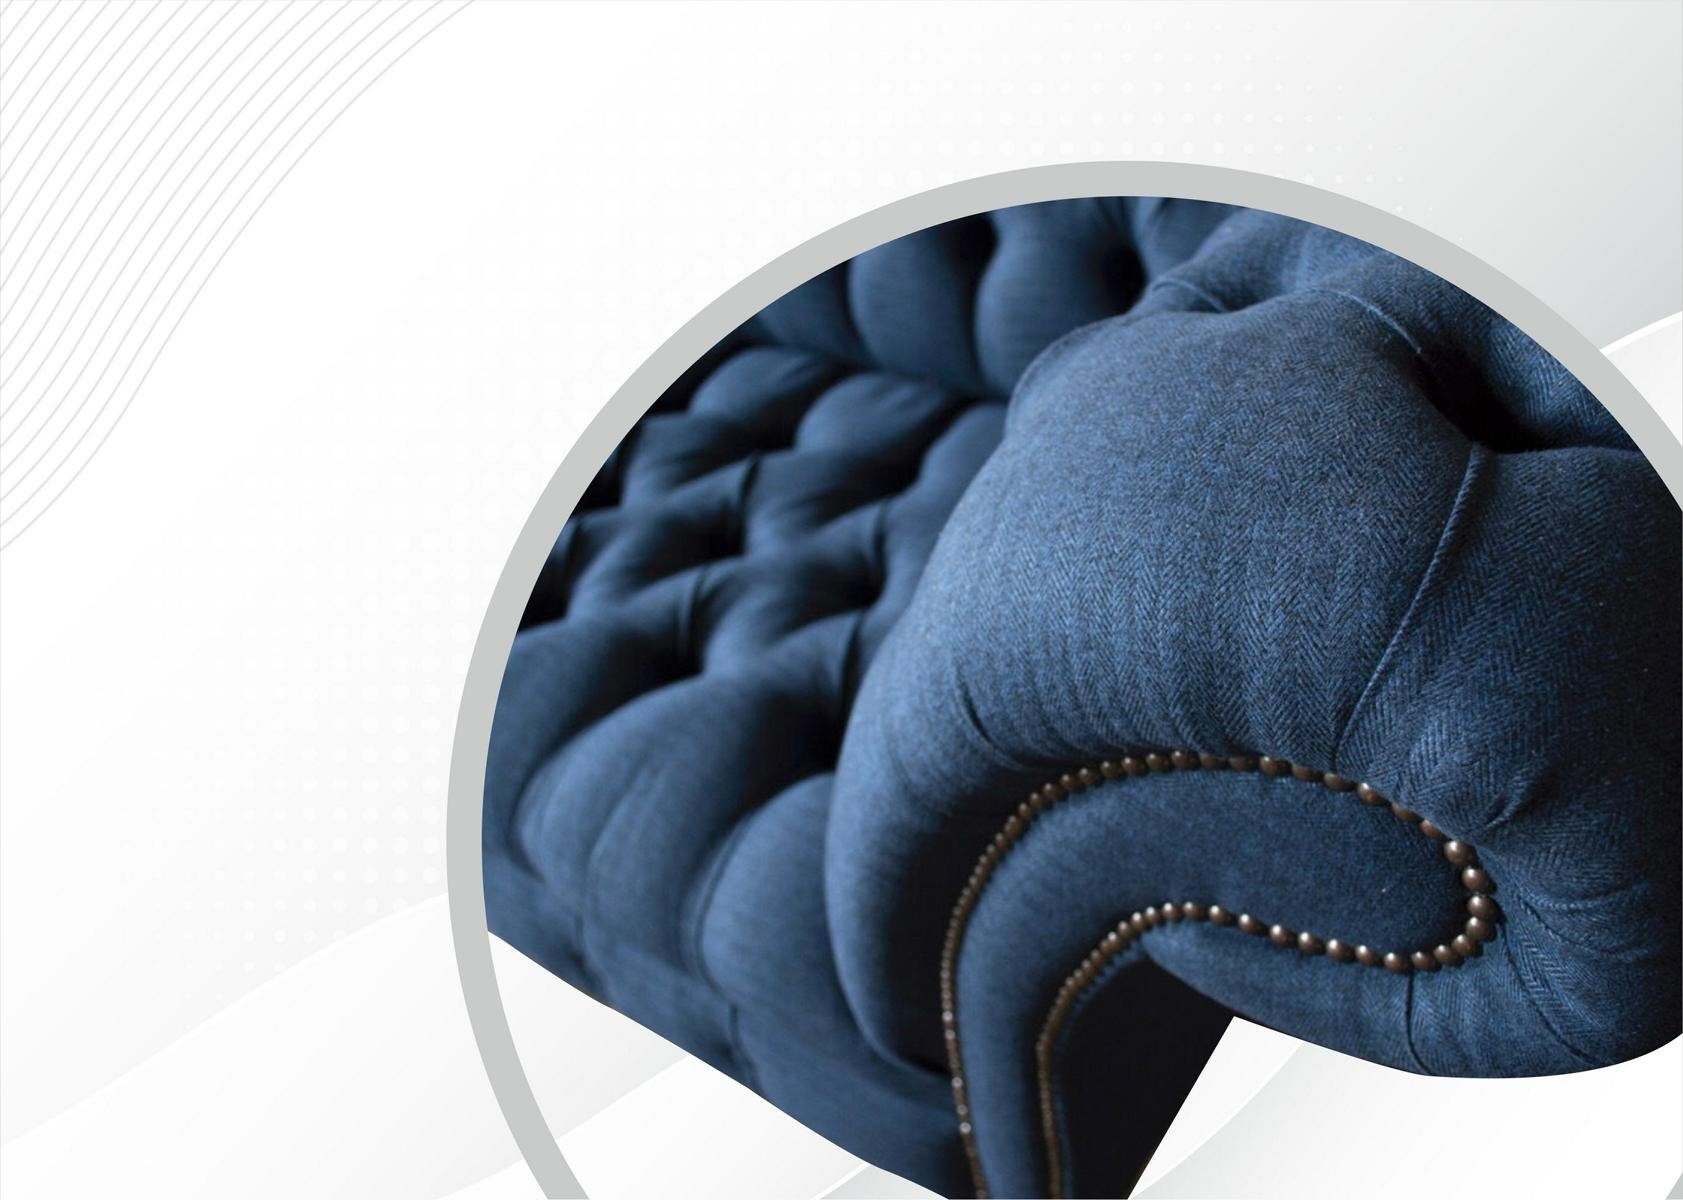 cm JVmoebel Design 3 Sofa Sitzer Chesterfield 225 Chesterfield-Sofa, Couch